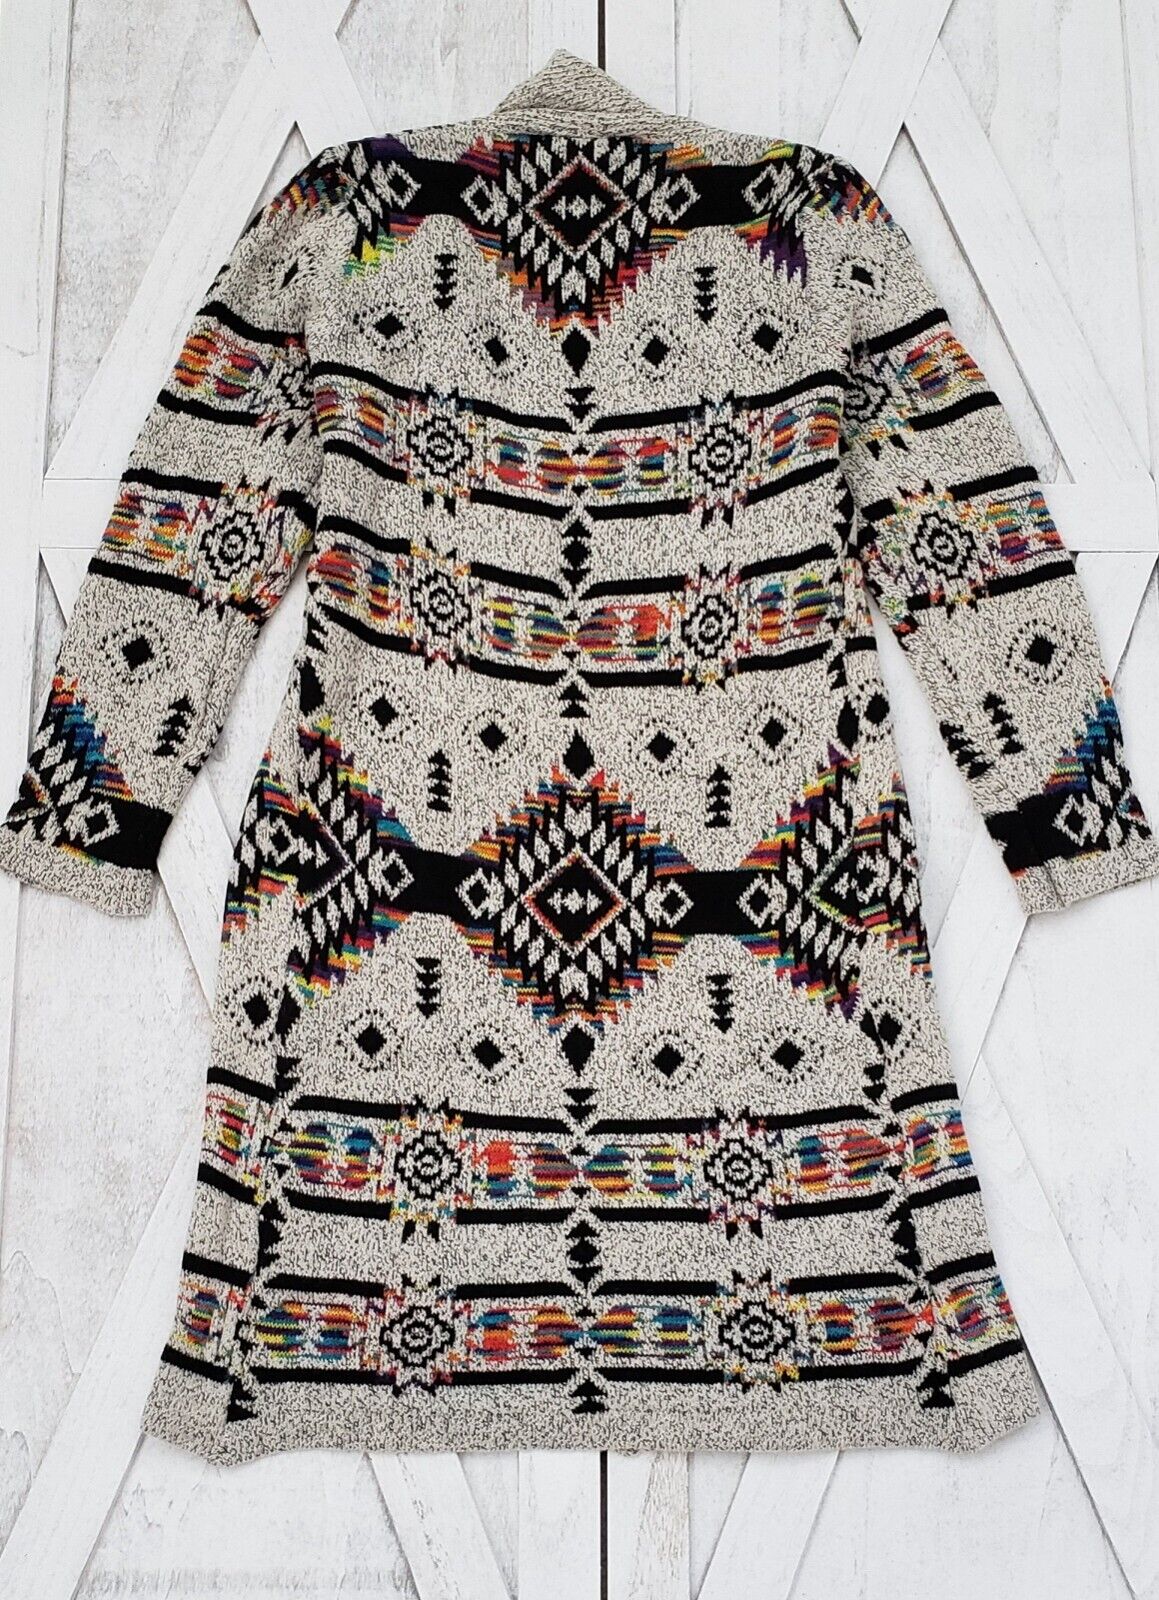 Boho Aztec Tribal Western Knit Long Cardigan Sweater Duster Coat Top Outerwear S